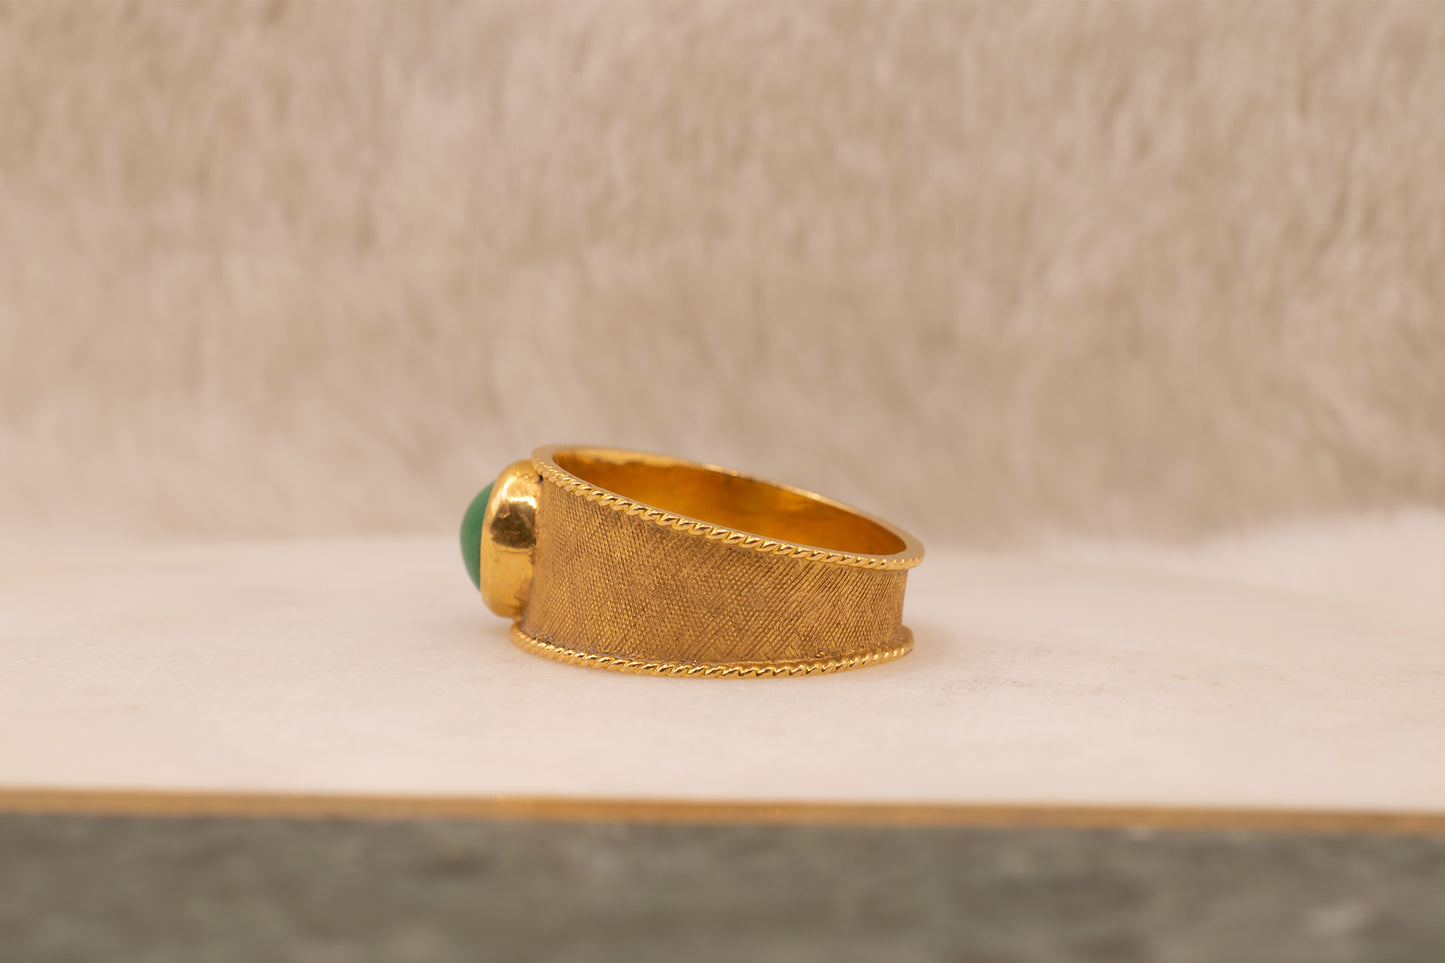 Vintage Handmade 18k Yellow Gold & Bezel Set Green Gemstone Coin Edge Ring with Florentine Finish